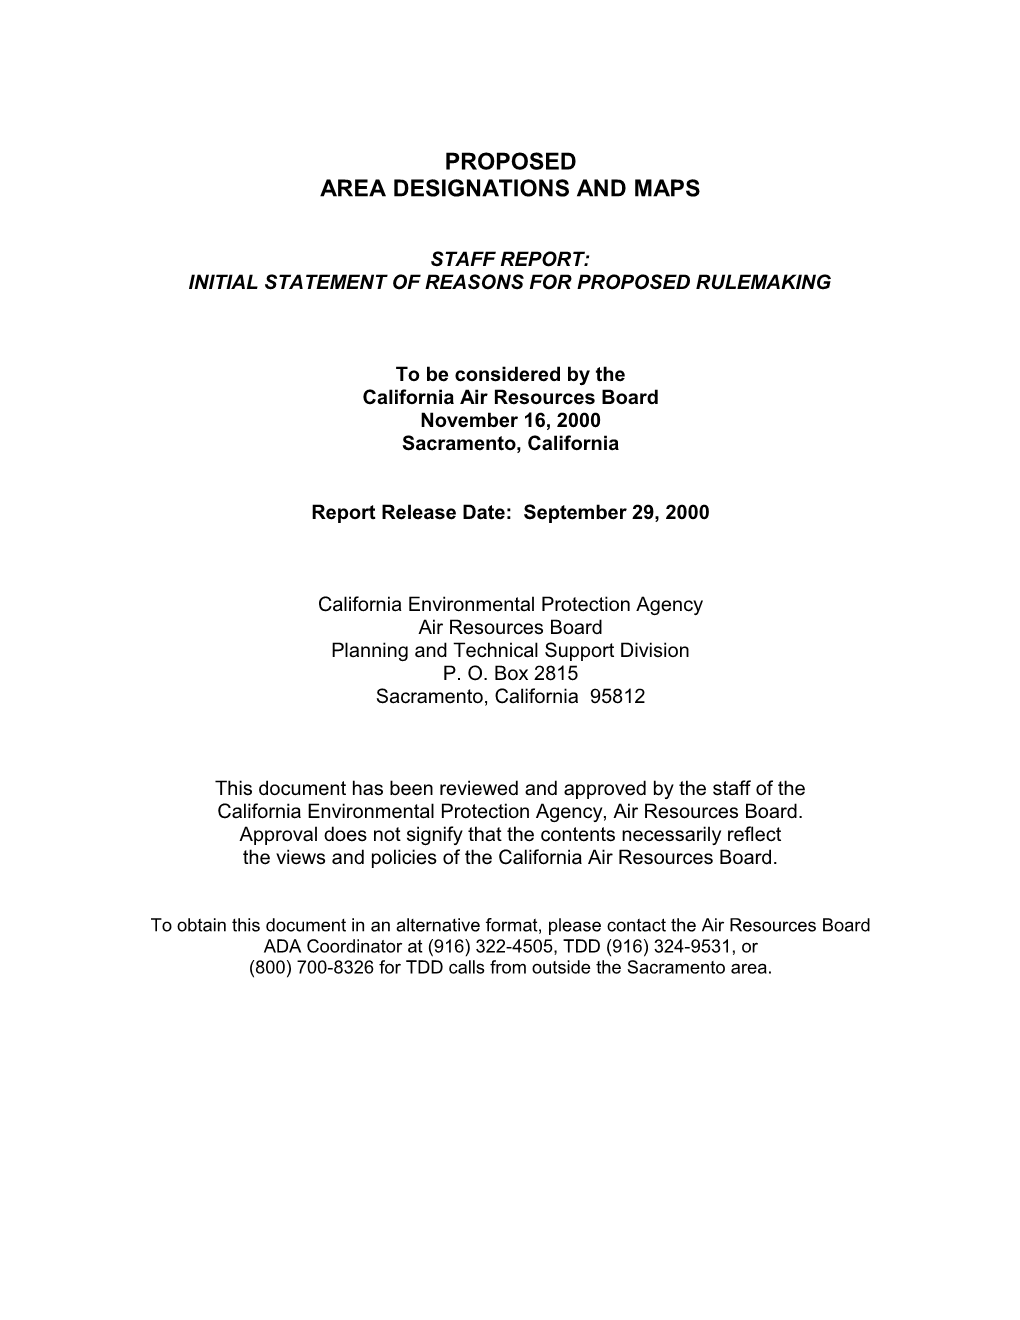 Area Designations and Maps